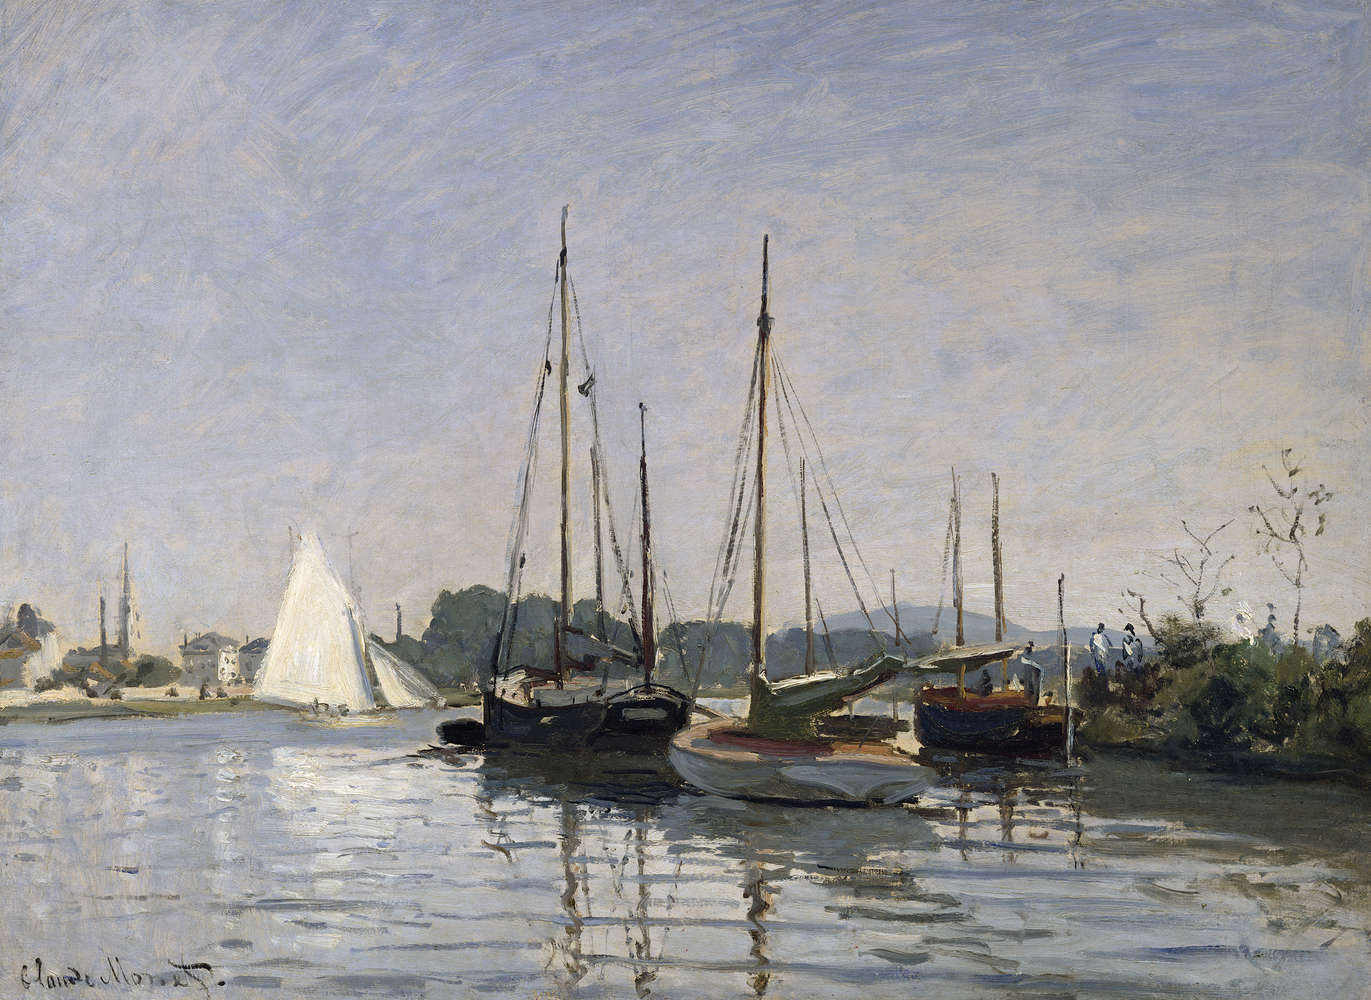             Fotomurali "Barche da diporto, Argenteuil" di Claude Monet
        